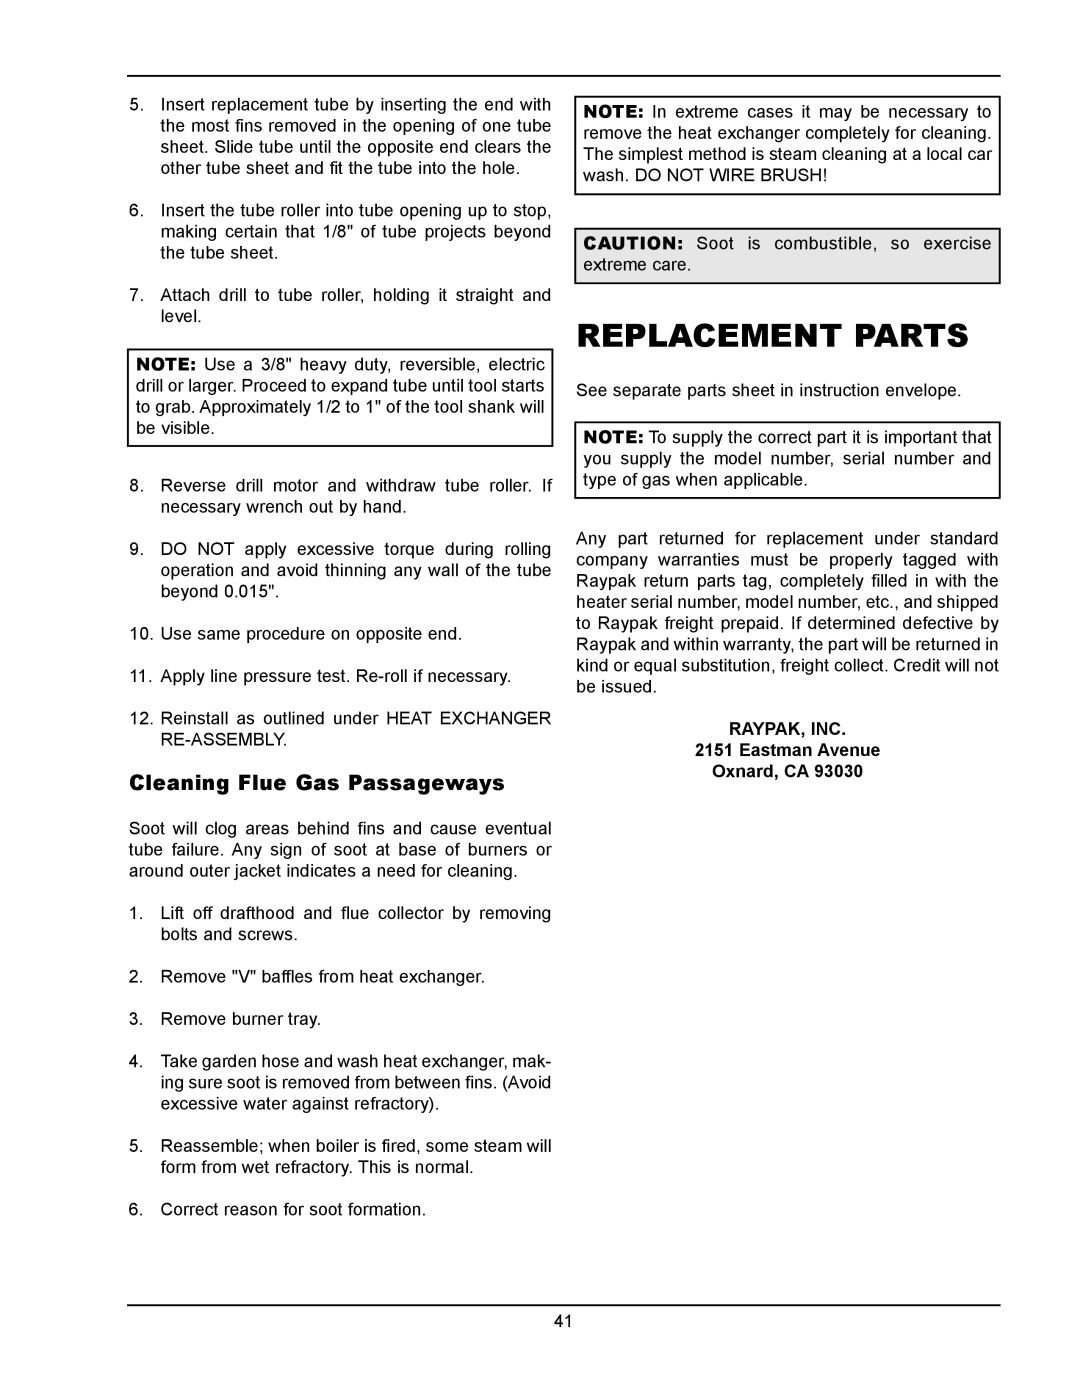 Raypak 133-4001 manual Replacement Parts, Cleaning Flue Gas Passageways, RAYPAK, INC 2151 Eastman Avenue Oxnard, CA 